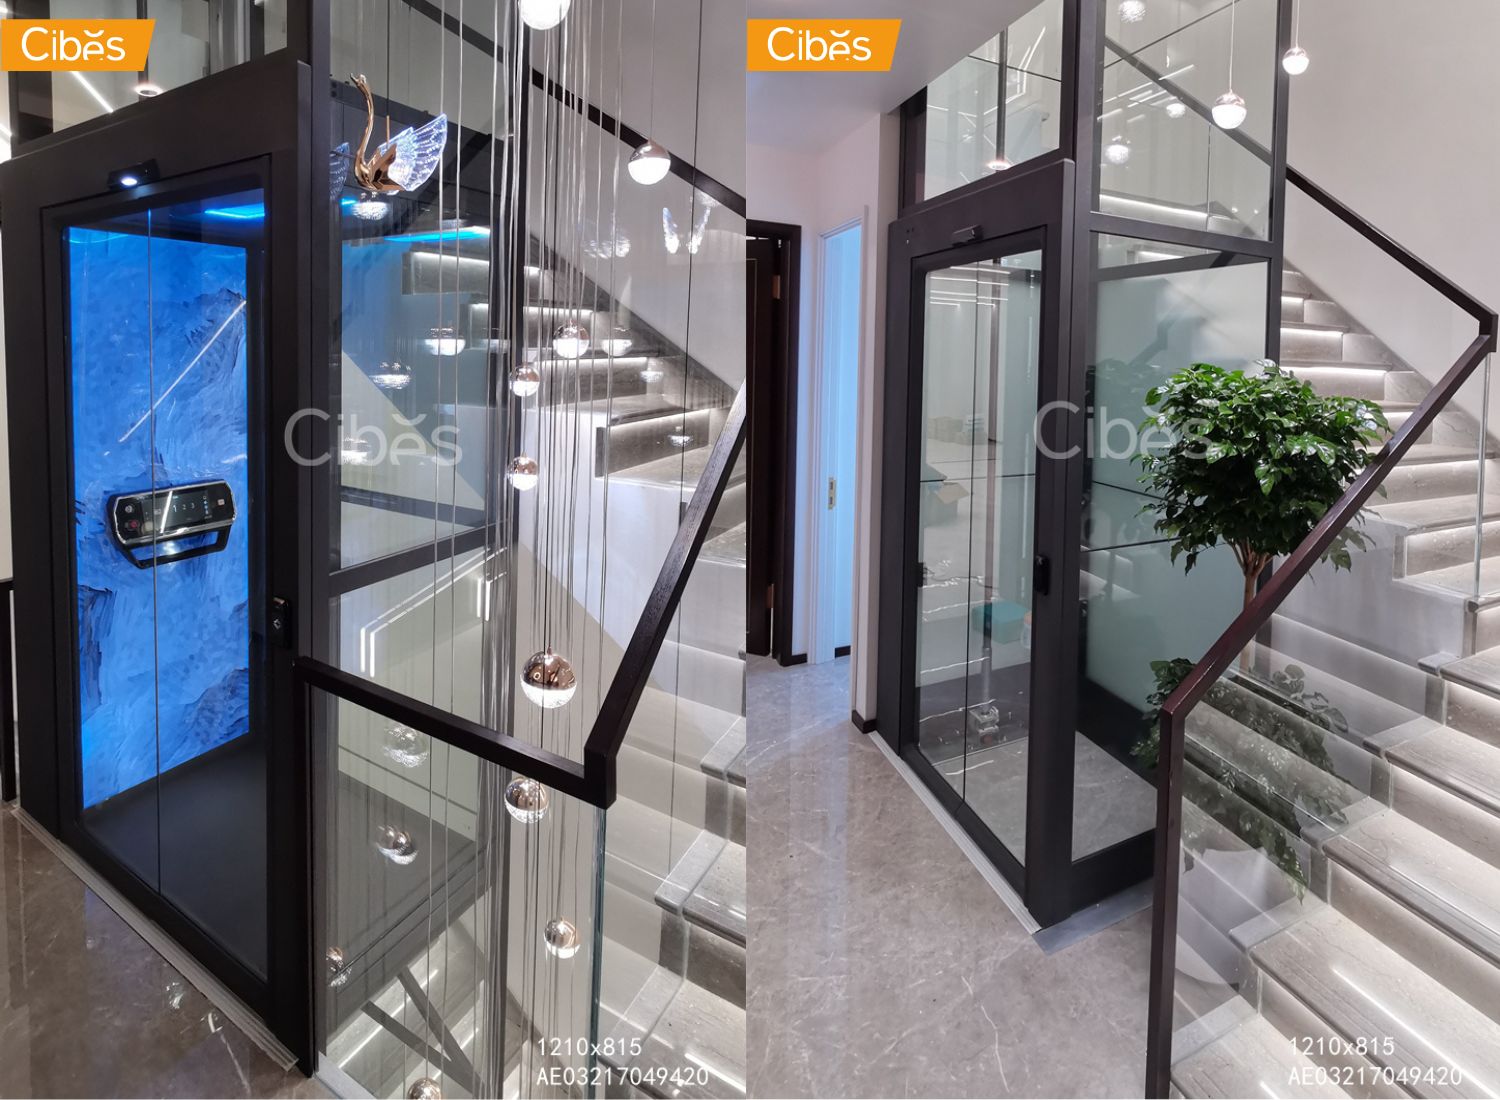 GLOBAL PROJECTS Cibes lift home elevater ซีเบส ลิฟท์ ลิฟต์บ้าน (6)